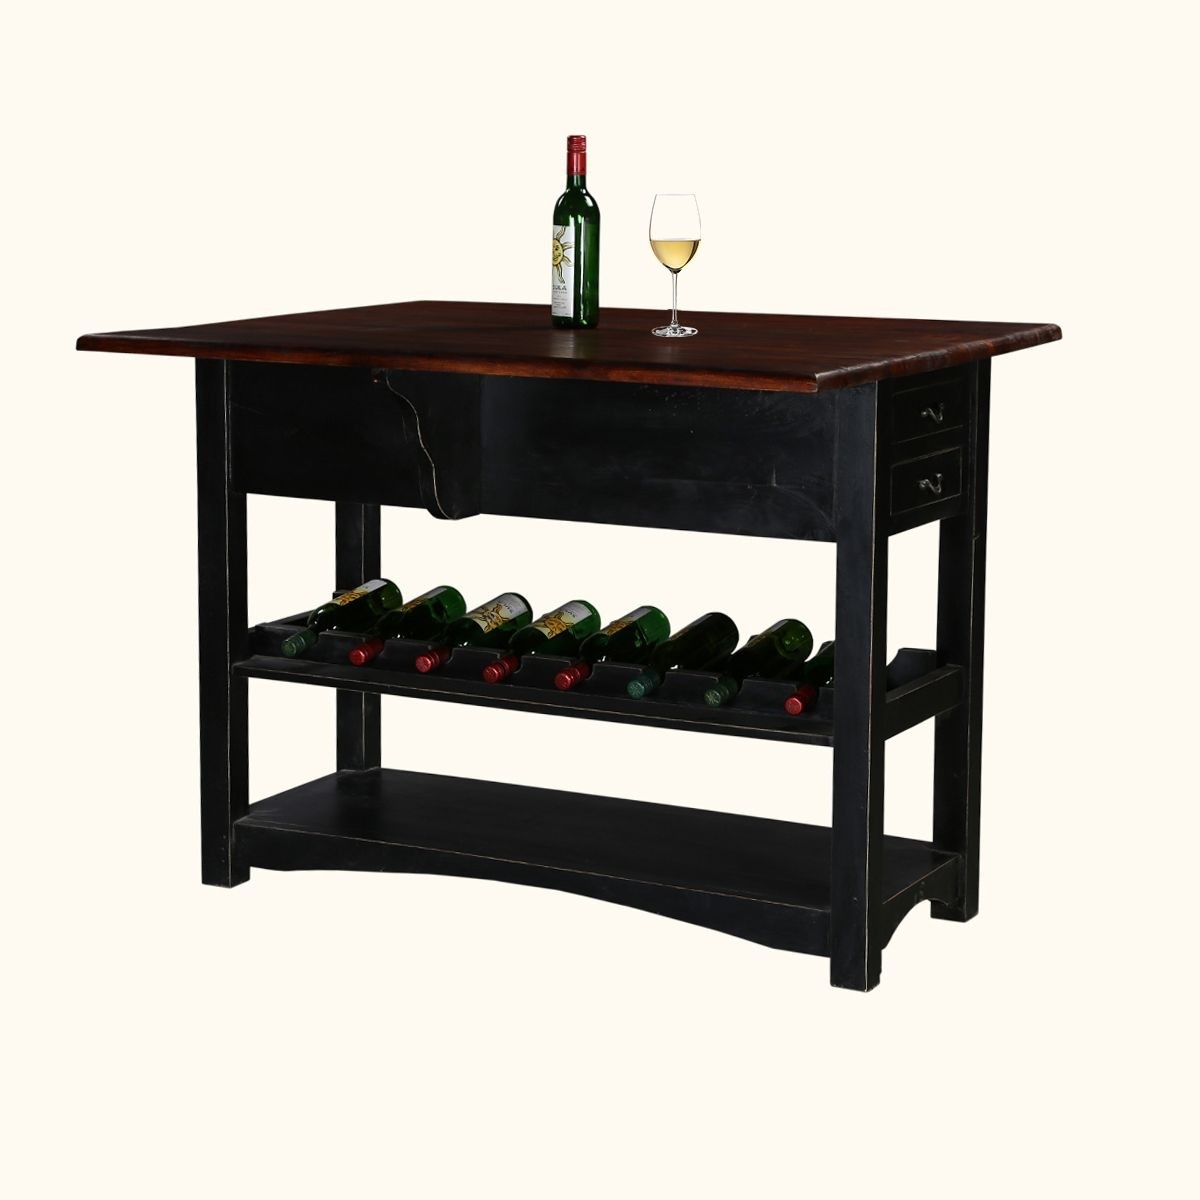 Galvan modern mango wood wine rack console table with 2